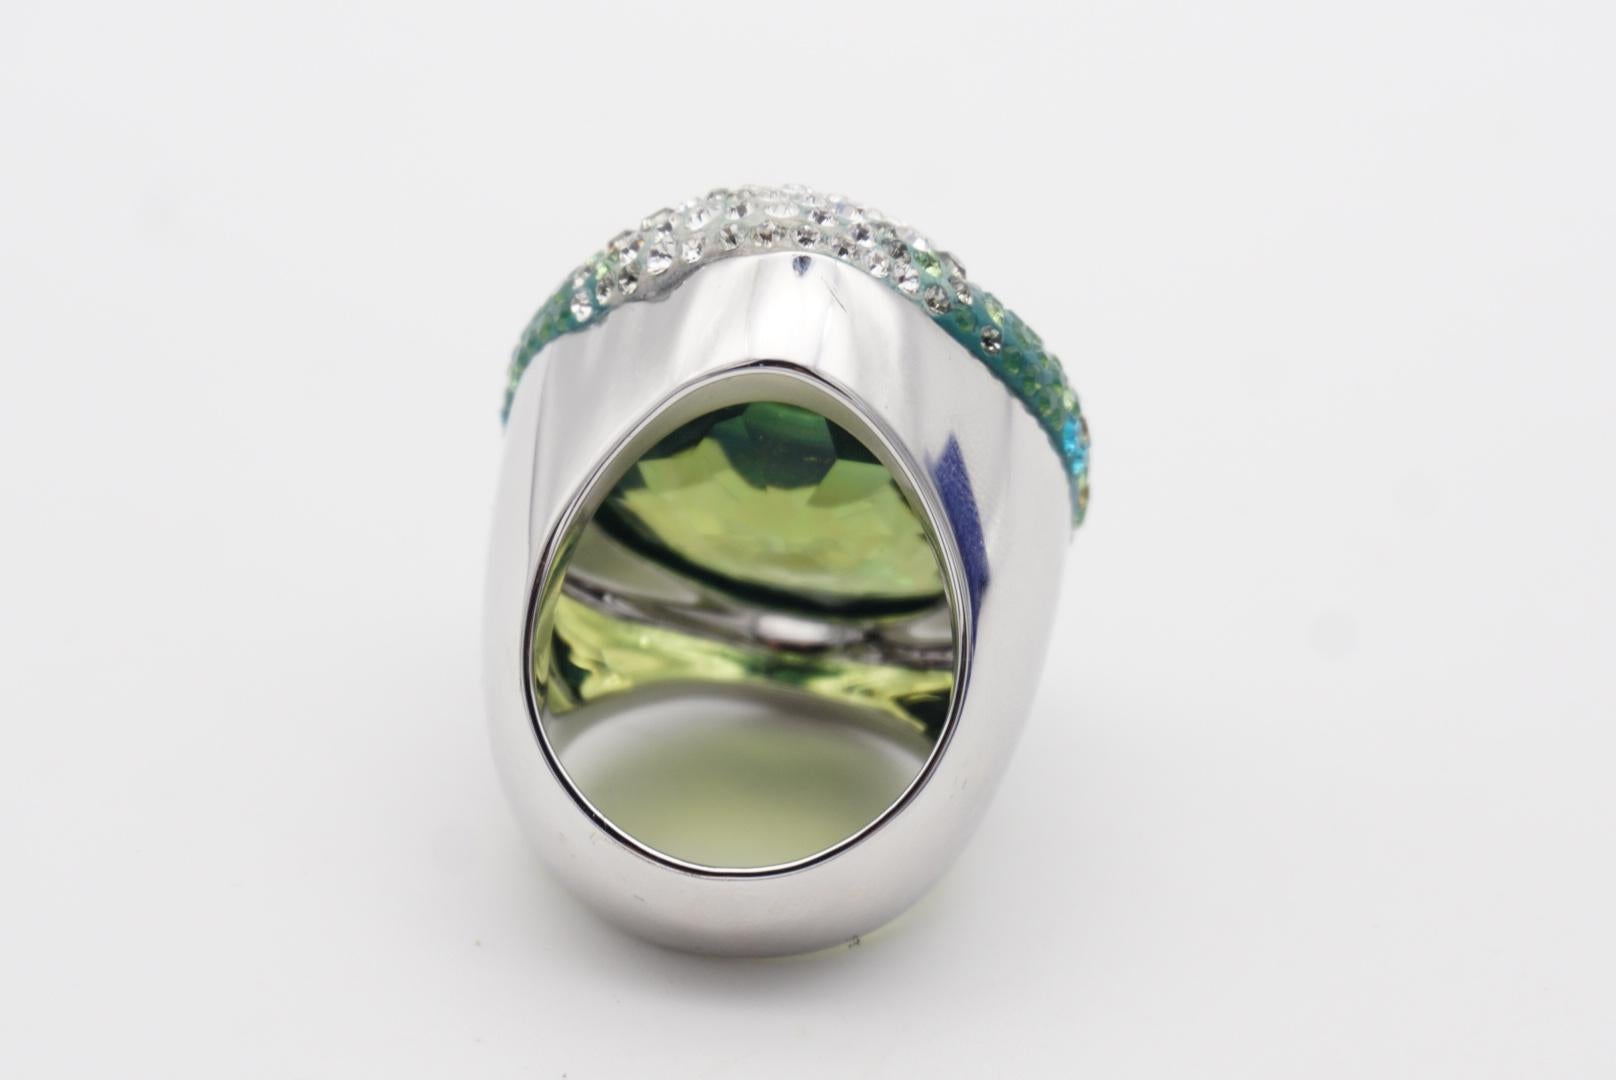 Swarovski Hyacinth Green Crystals Large Nirvana Cocktail Ring, Size N, 55, White For Sale 2